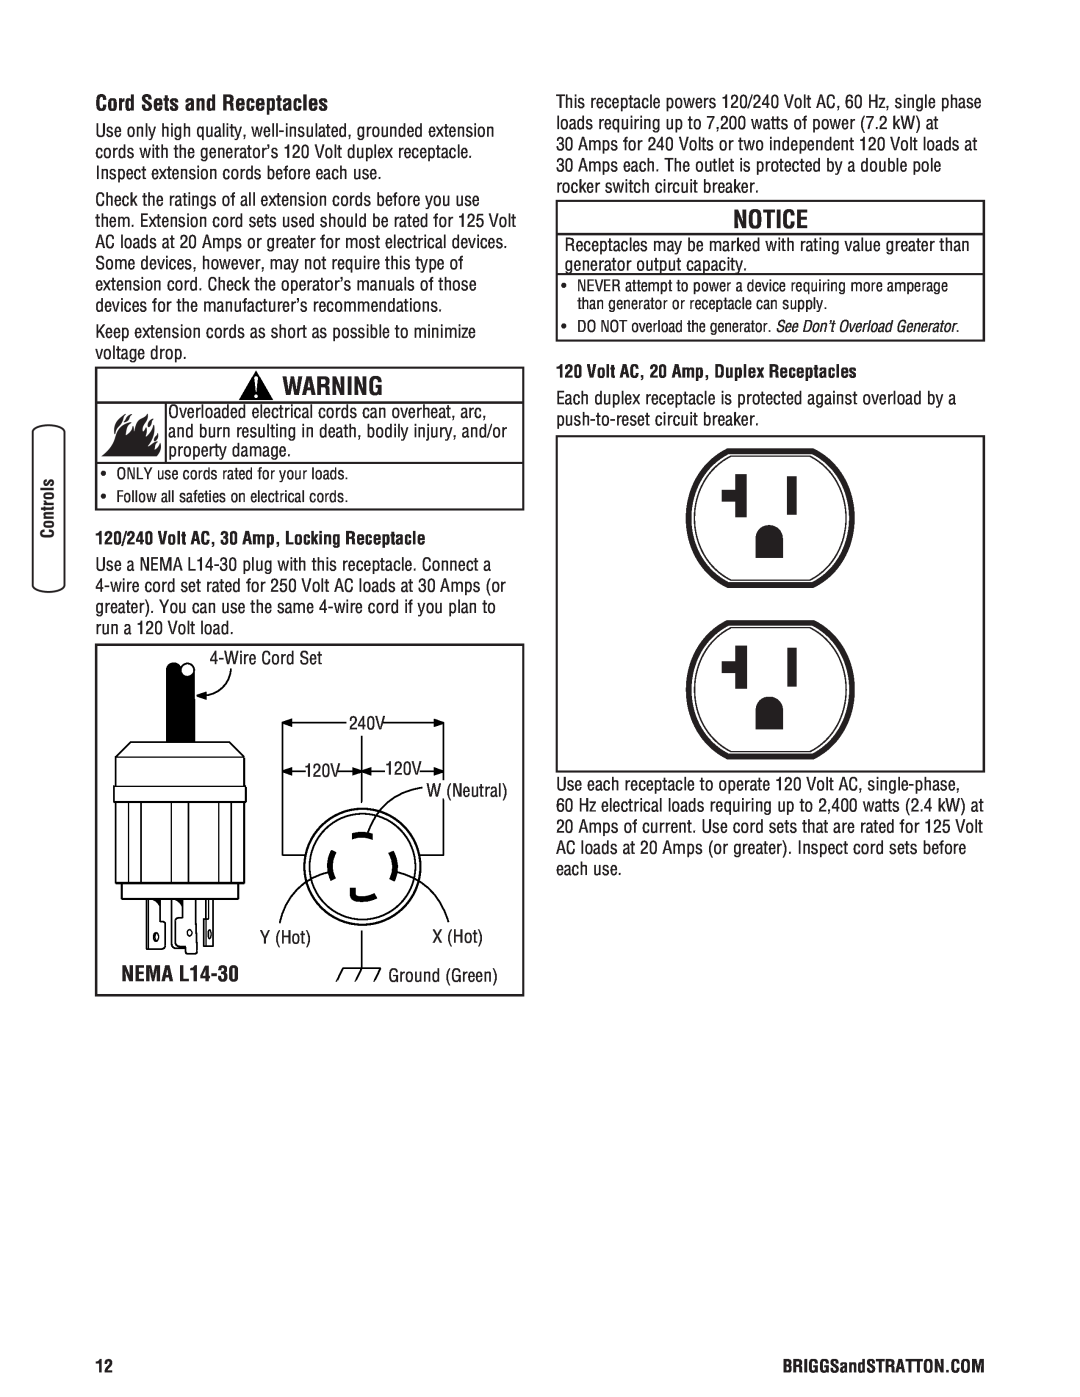 Briggs & Stratton 13500 manual Cord Sets and Receptacles, NEMA L14-30, 120/240 Volt AC, 30 Amp, Locking Receptacle 